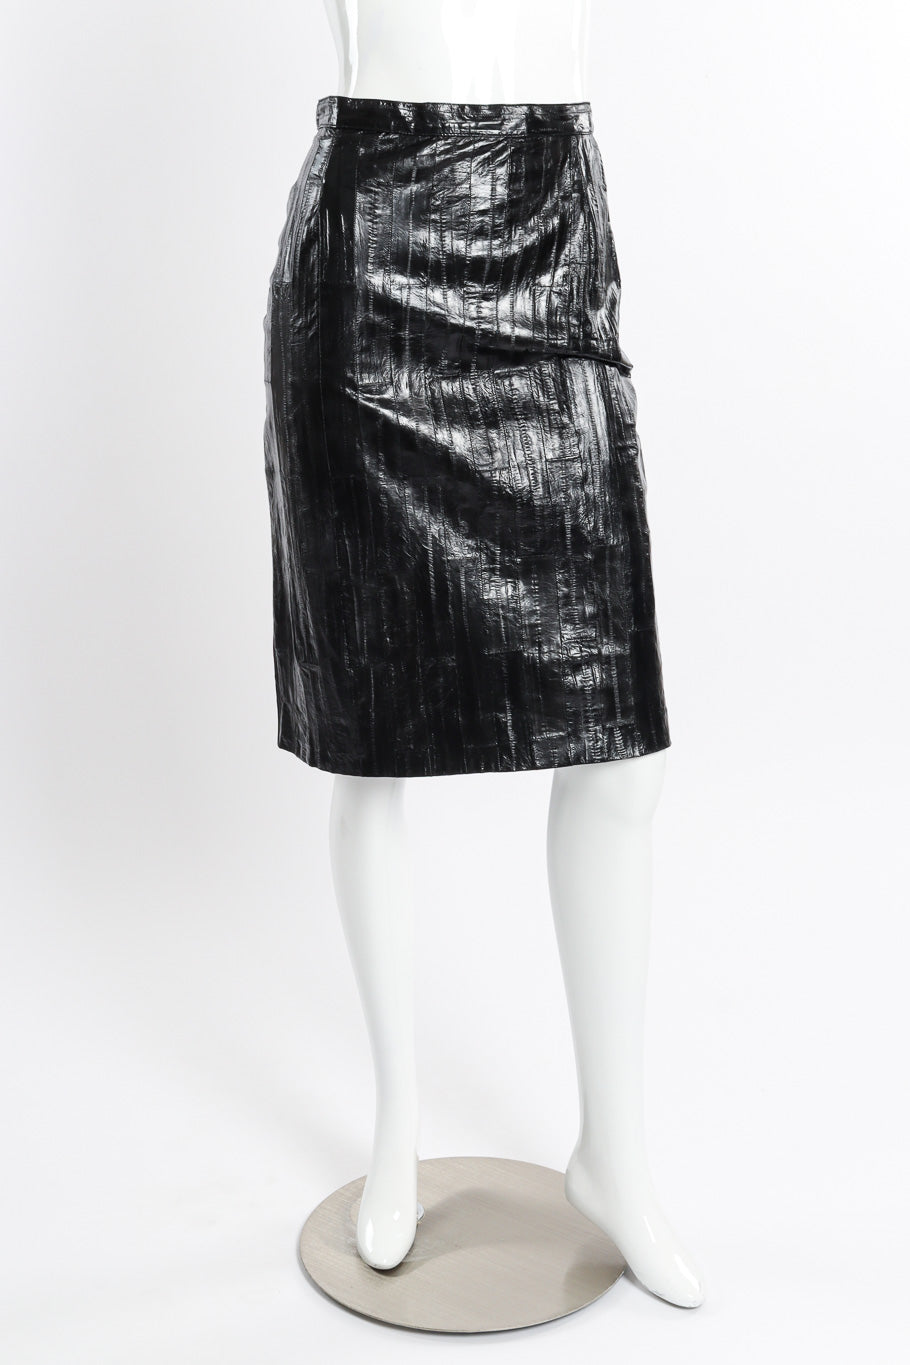 Vintage Krizia Eel Patent Leather Skirt front view on mannequin @recessla